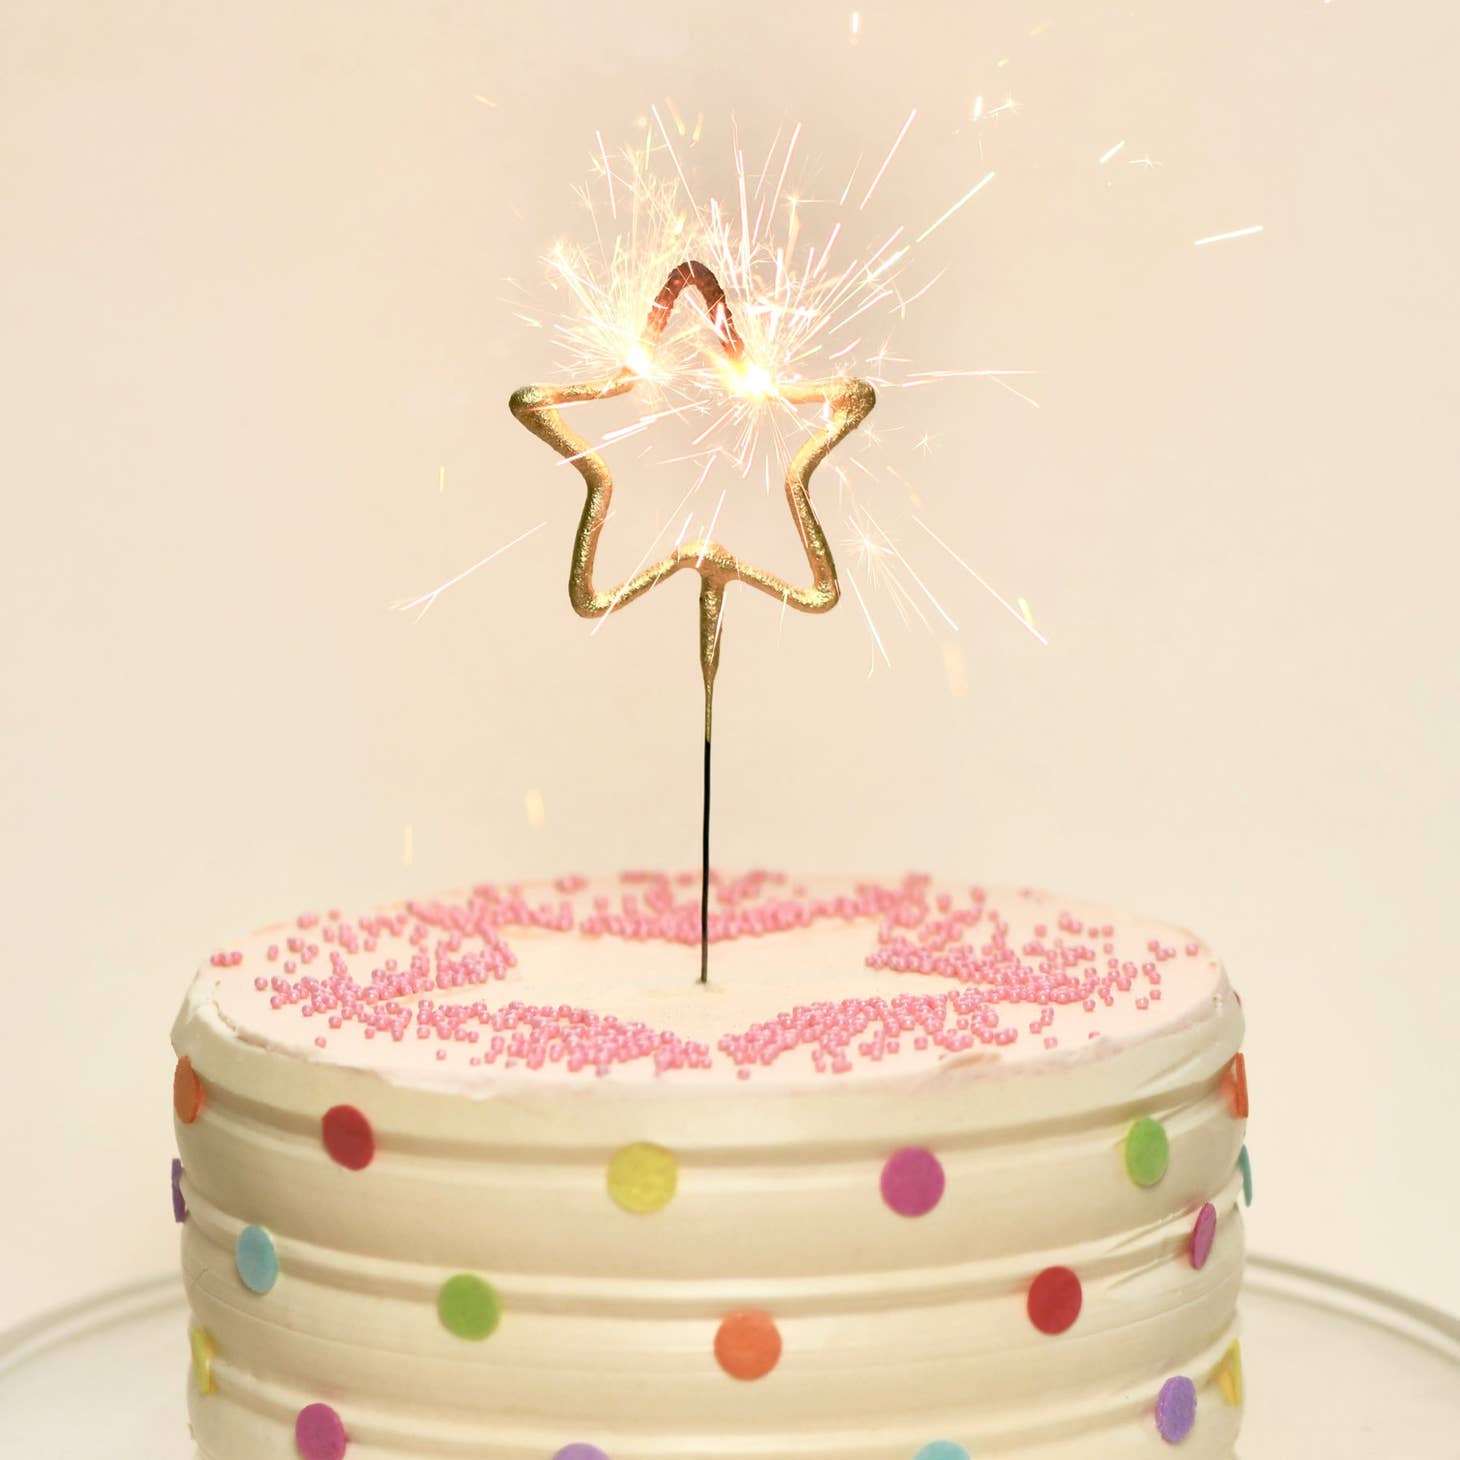 Big Golden Sparkler Happy Birthday - Favorite Little Things Co